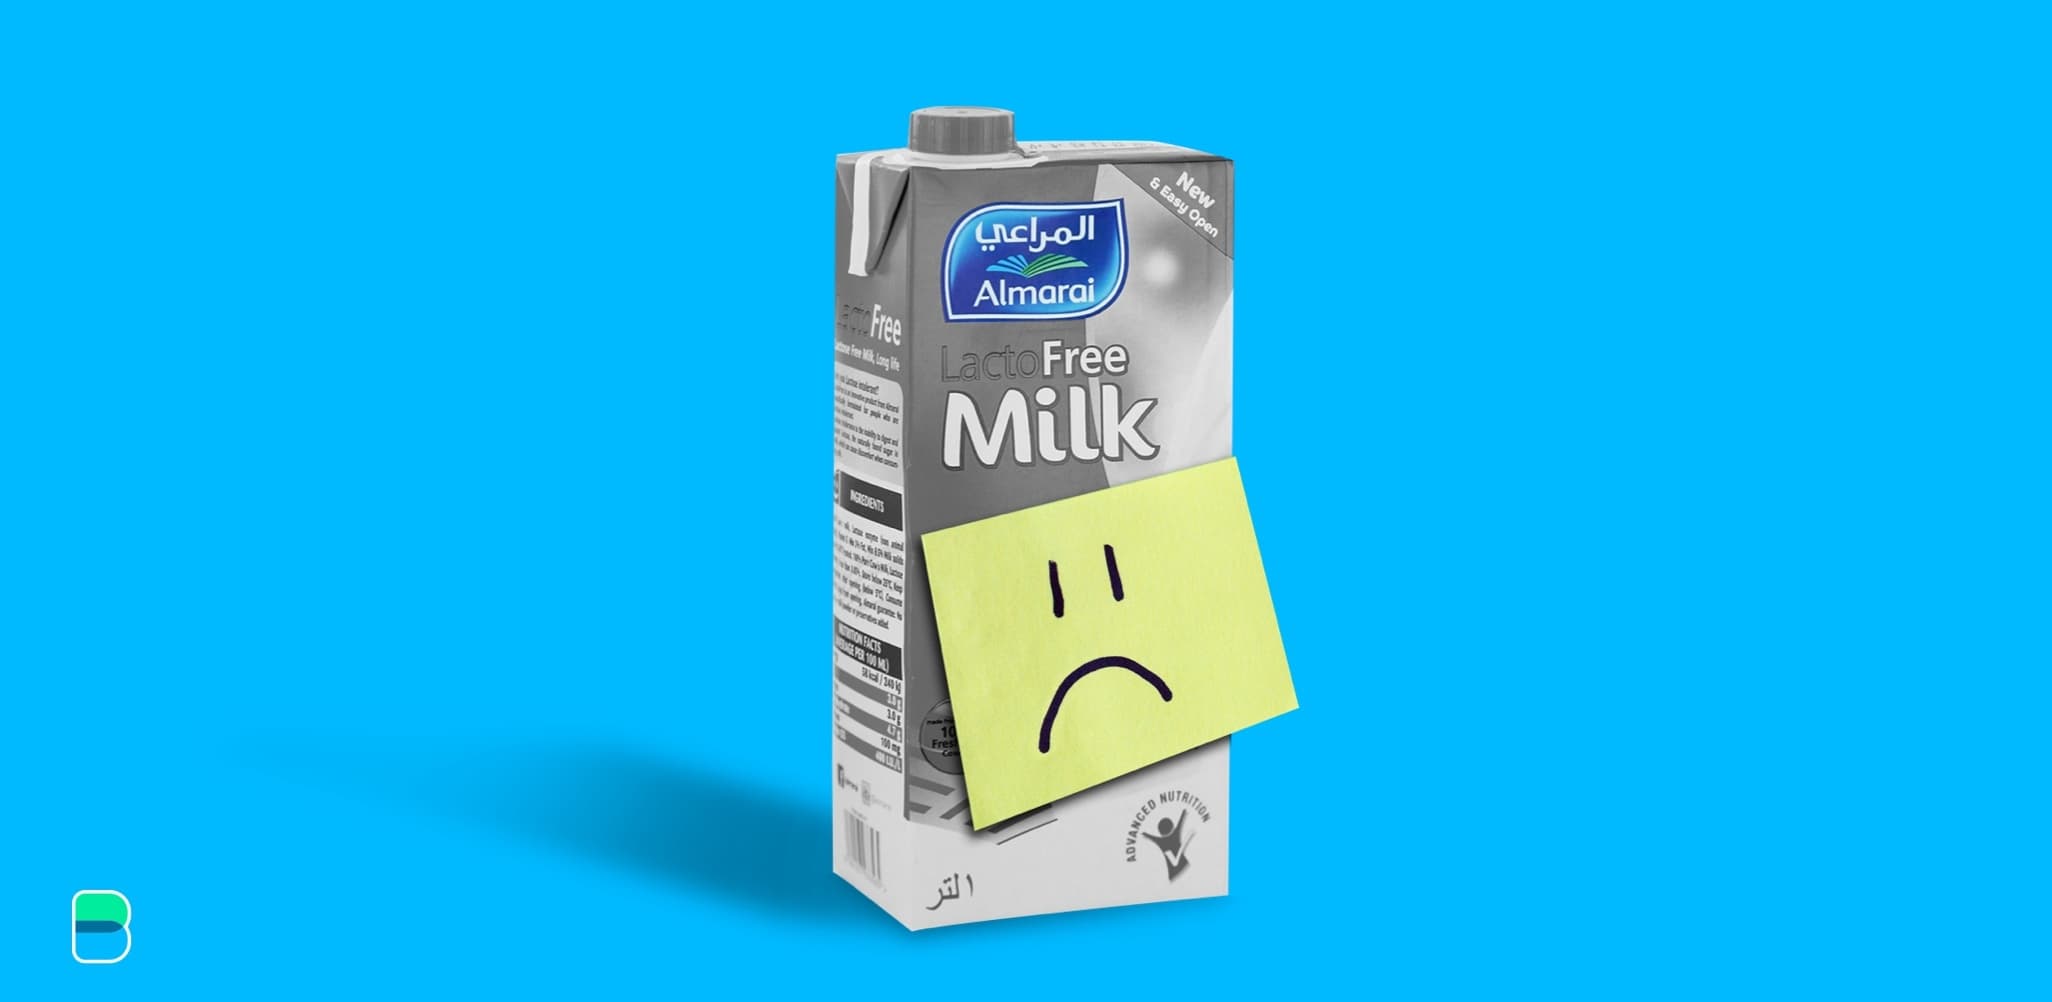 Dairy-free is hurting Almarai&rsquo;s profits